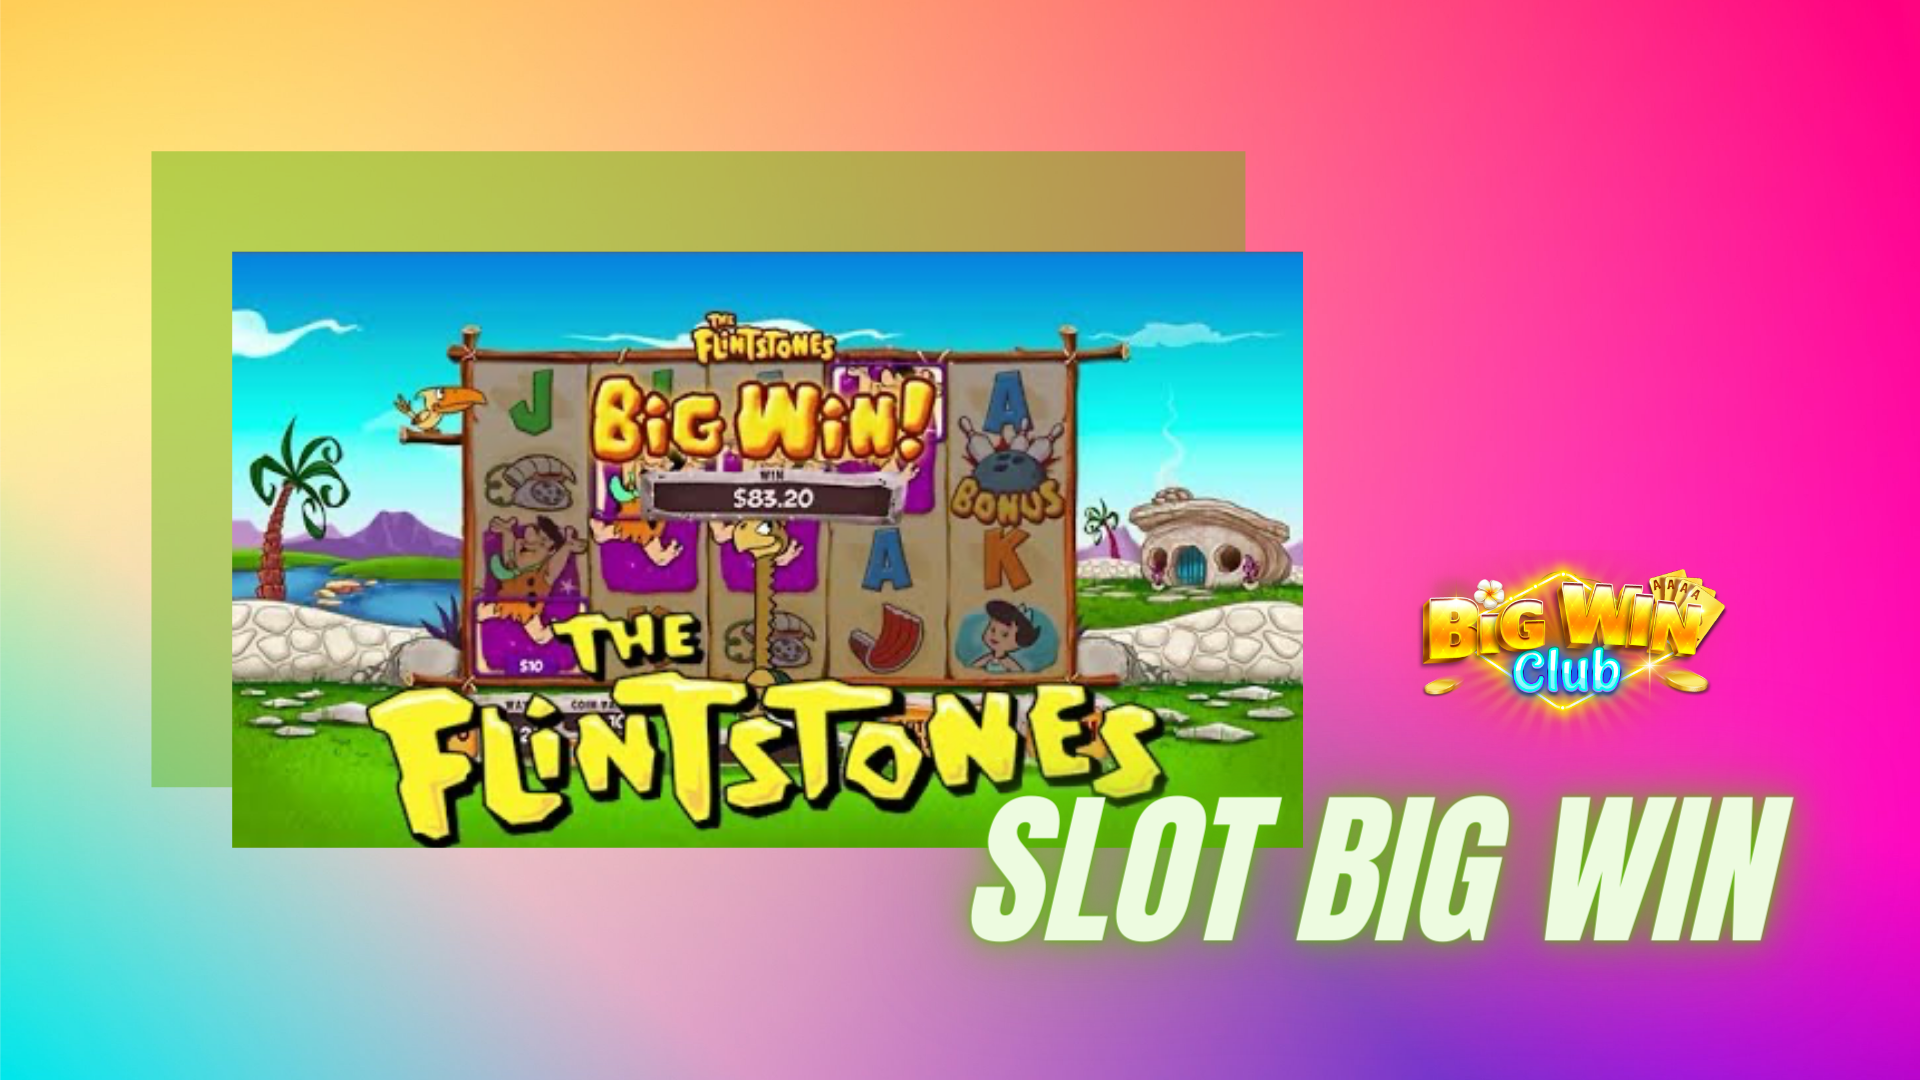 Ano ang Flintstones slot machine big win?